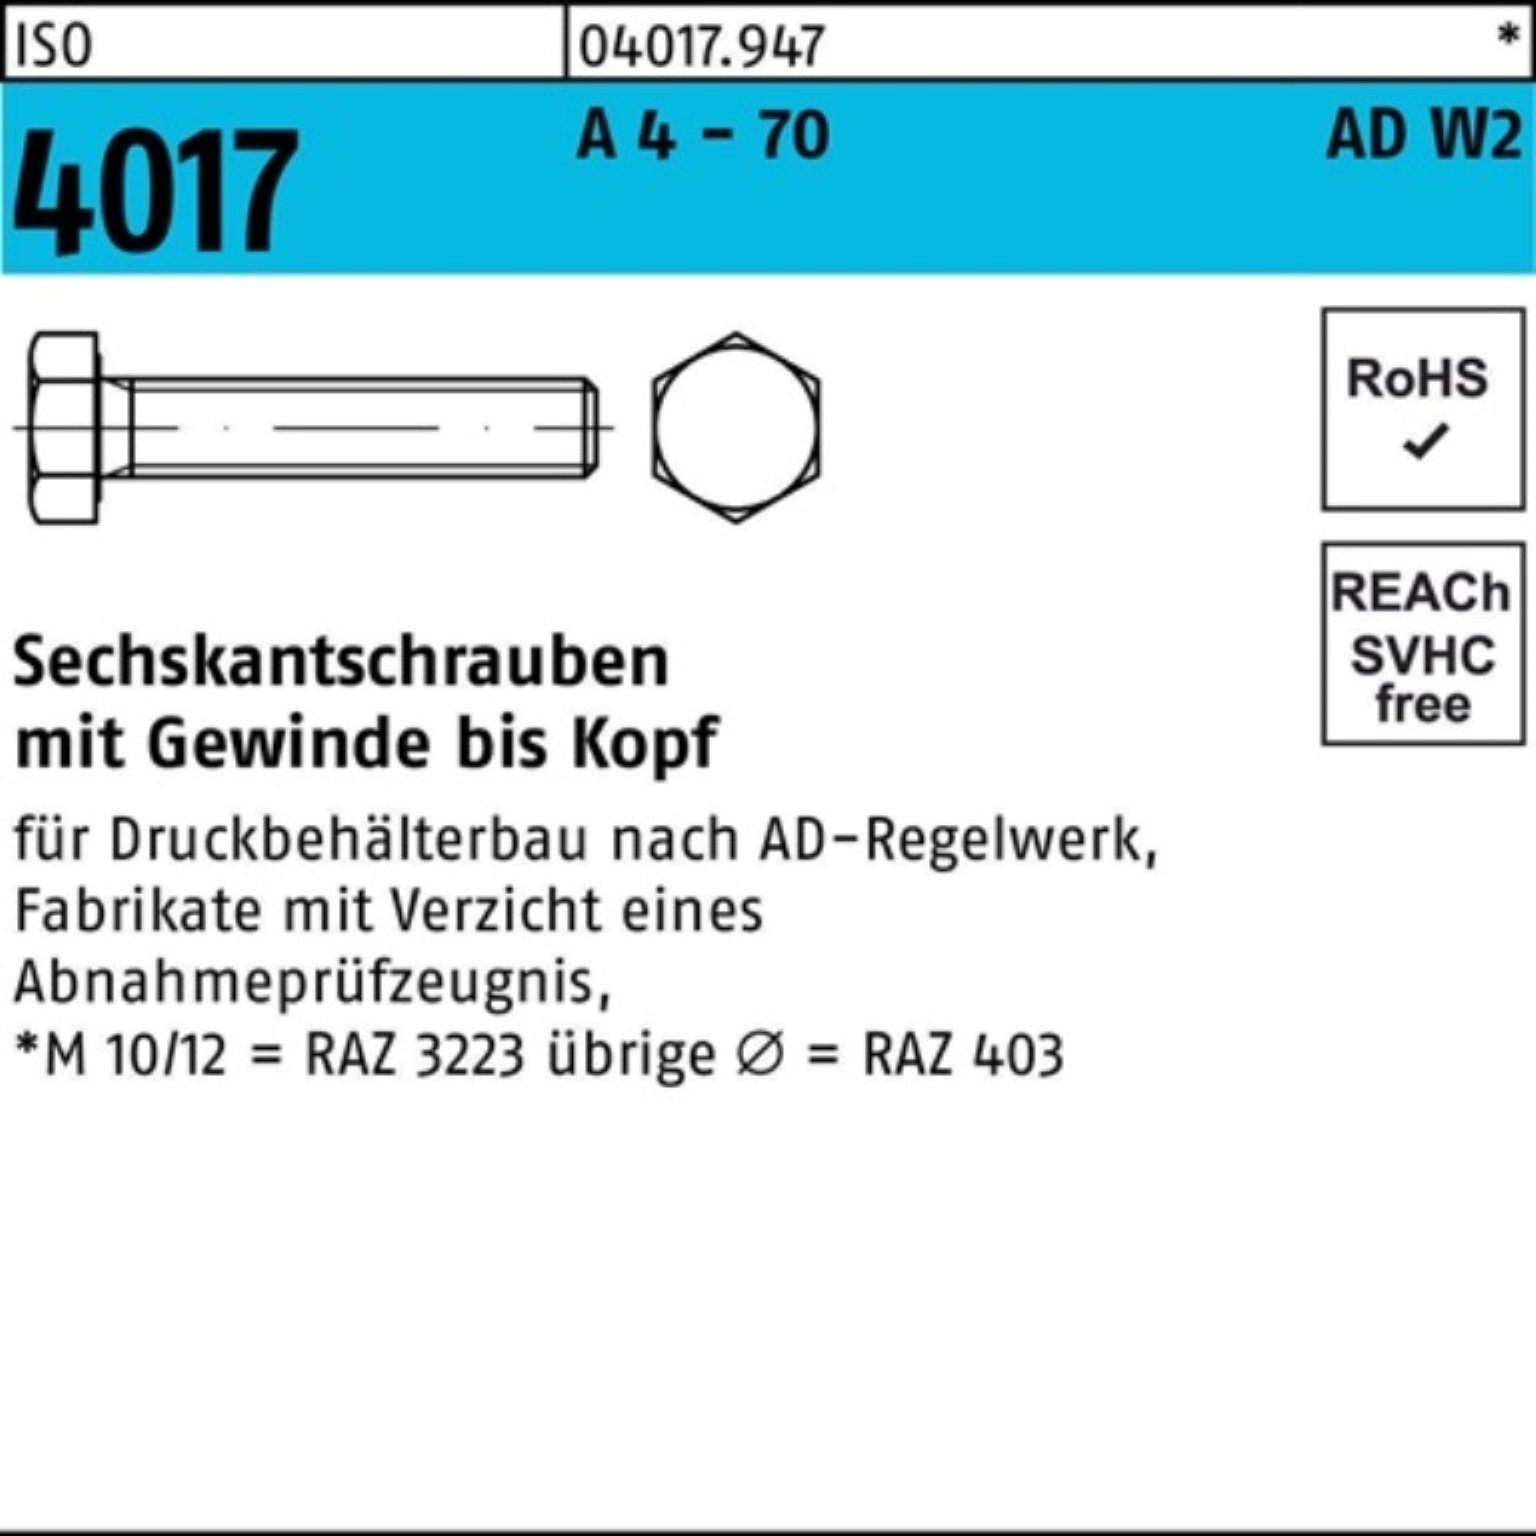 Bufab Sechskantschraube 100er Pack Sechskantschraube ISO 4017 VG M16x 55 A 4 - 70 AD-W2 25 St